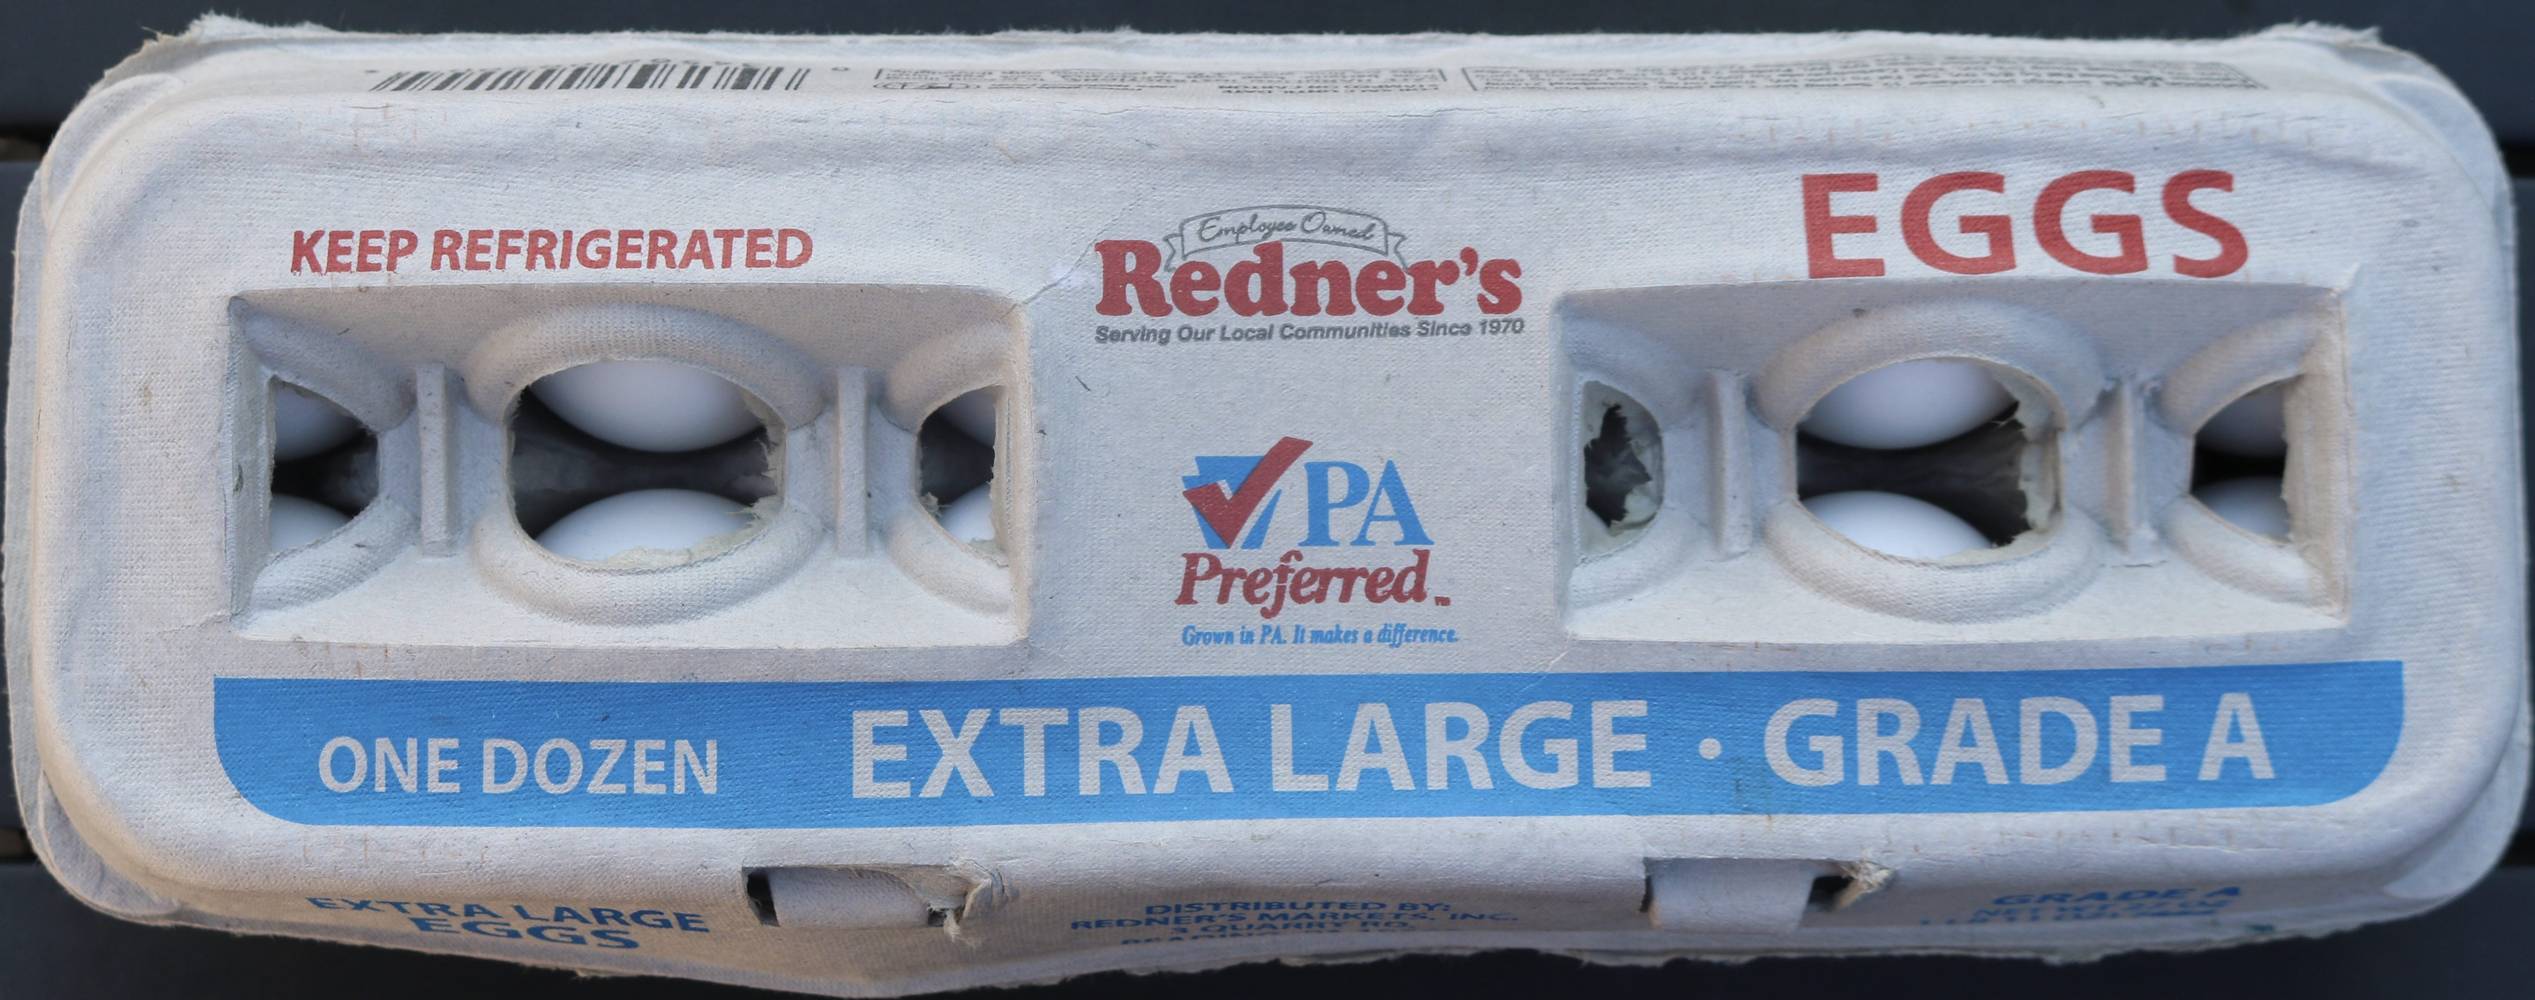 Redner's Vpa Preferred Eggs Extra Large Grade a (12 ct)